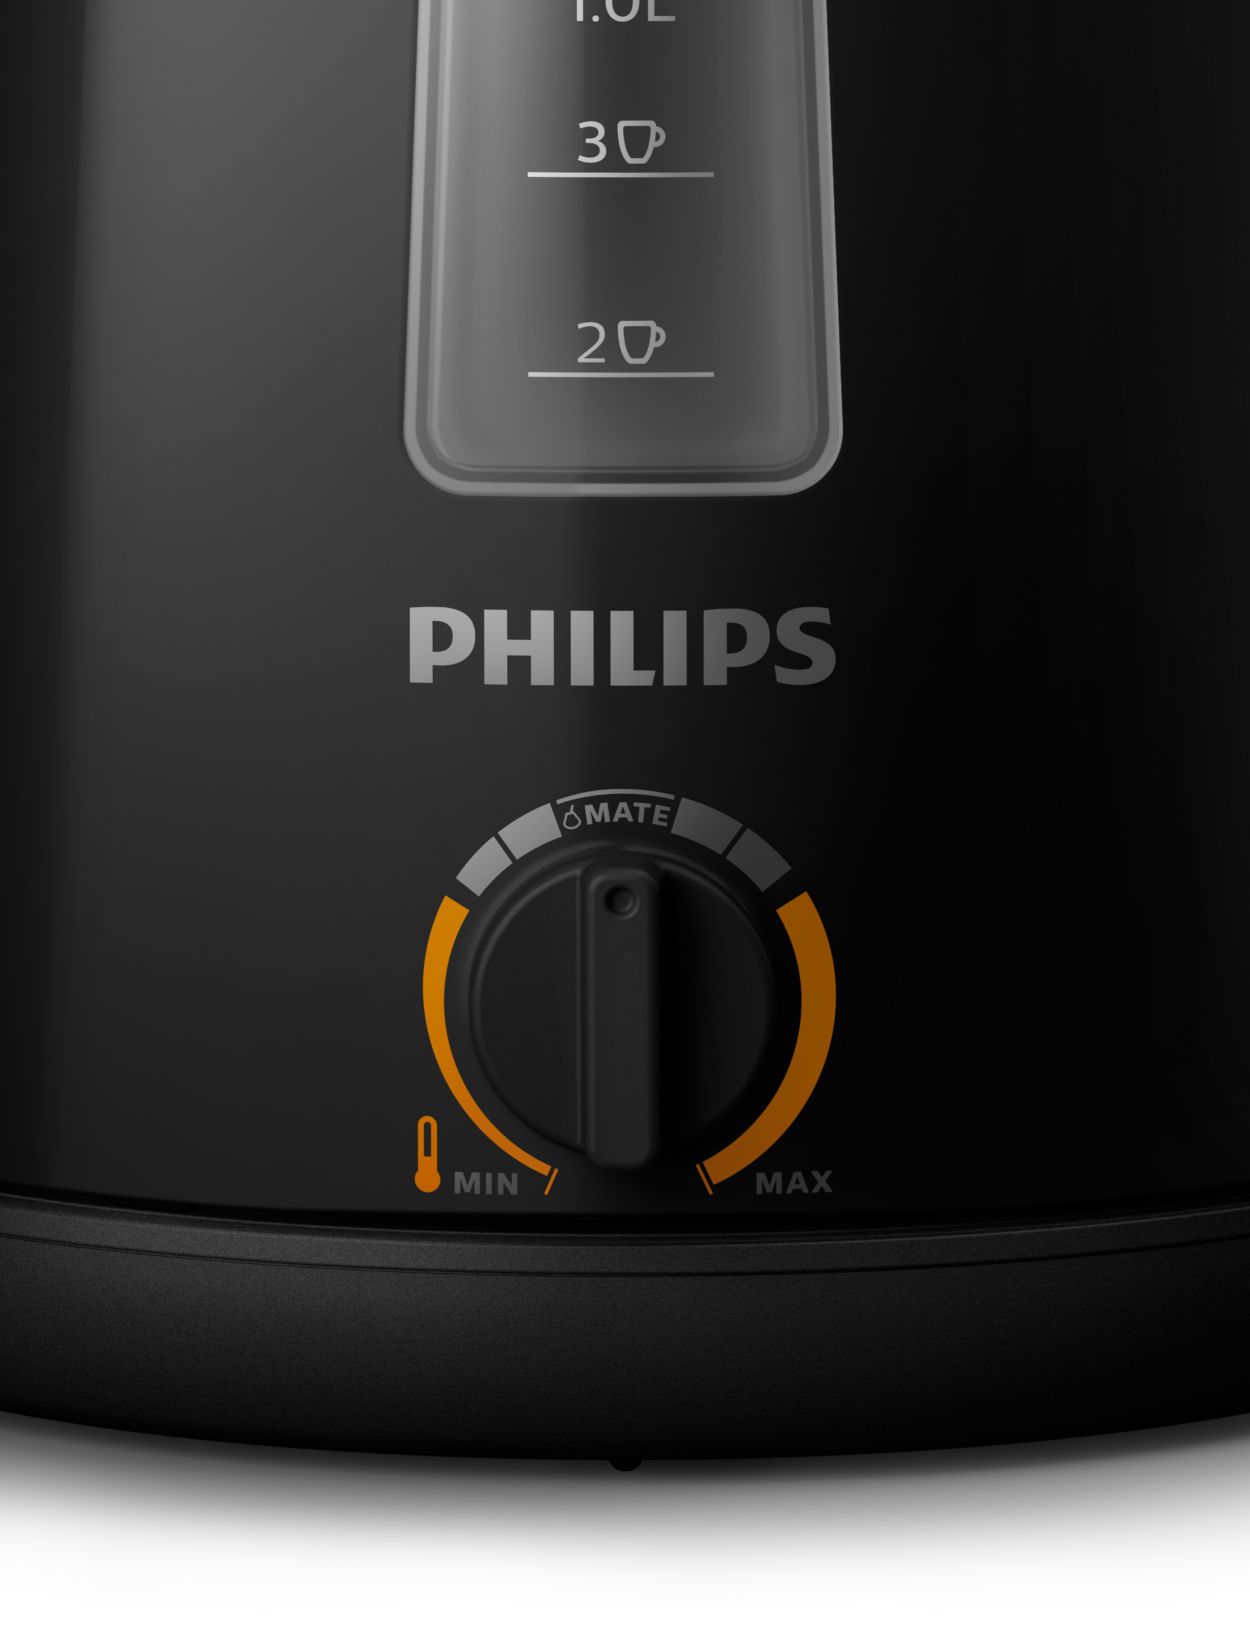 Philips Electric Kettle HD9368-00 - Auto Shut-Off, Ergonomic